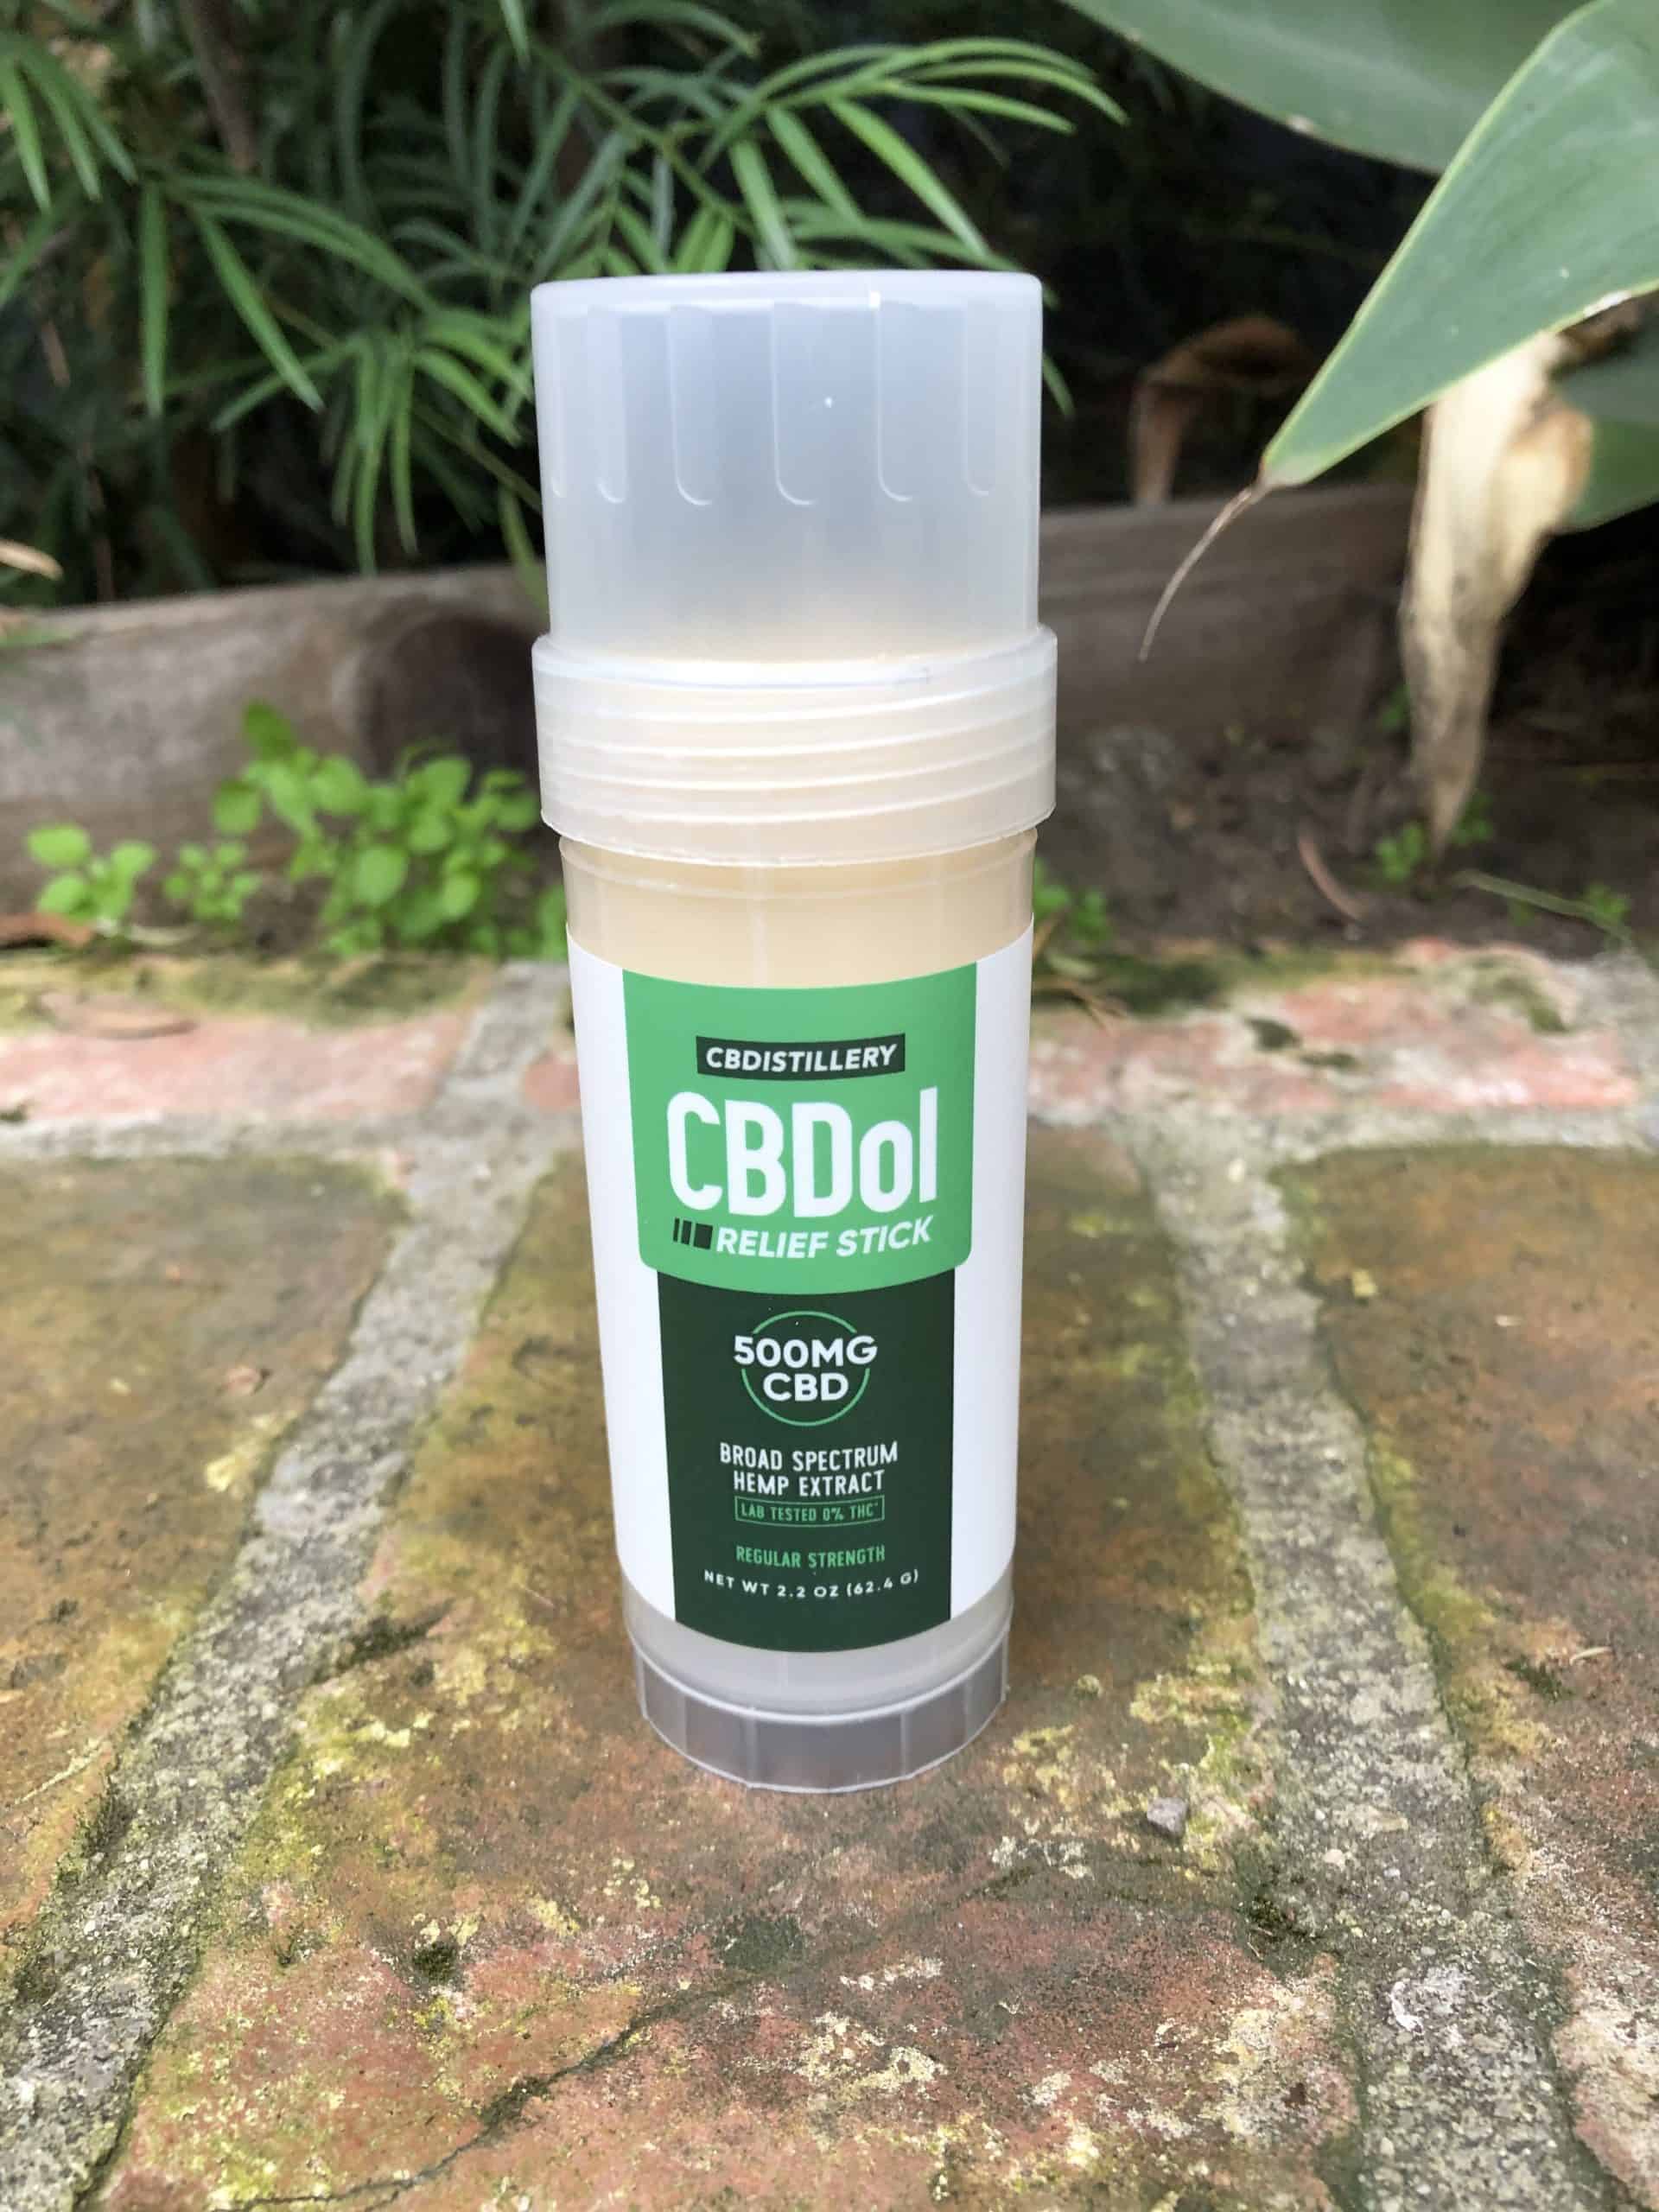 cbdistillery cbdol relief stick save on cannabis beauty shot